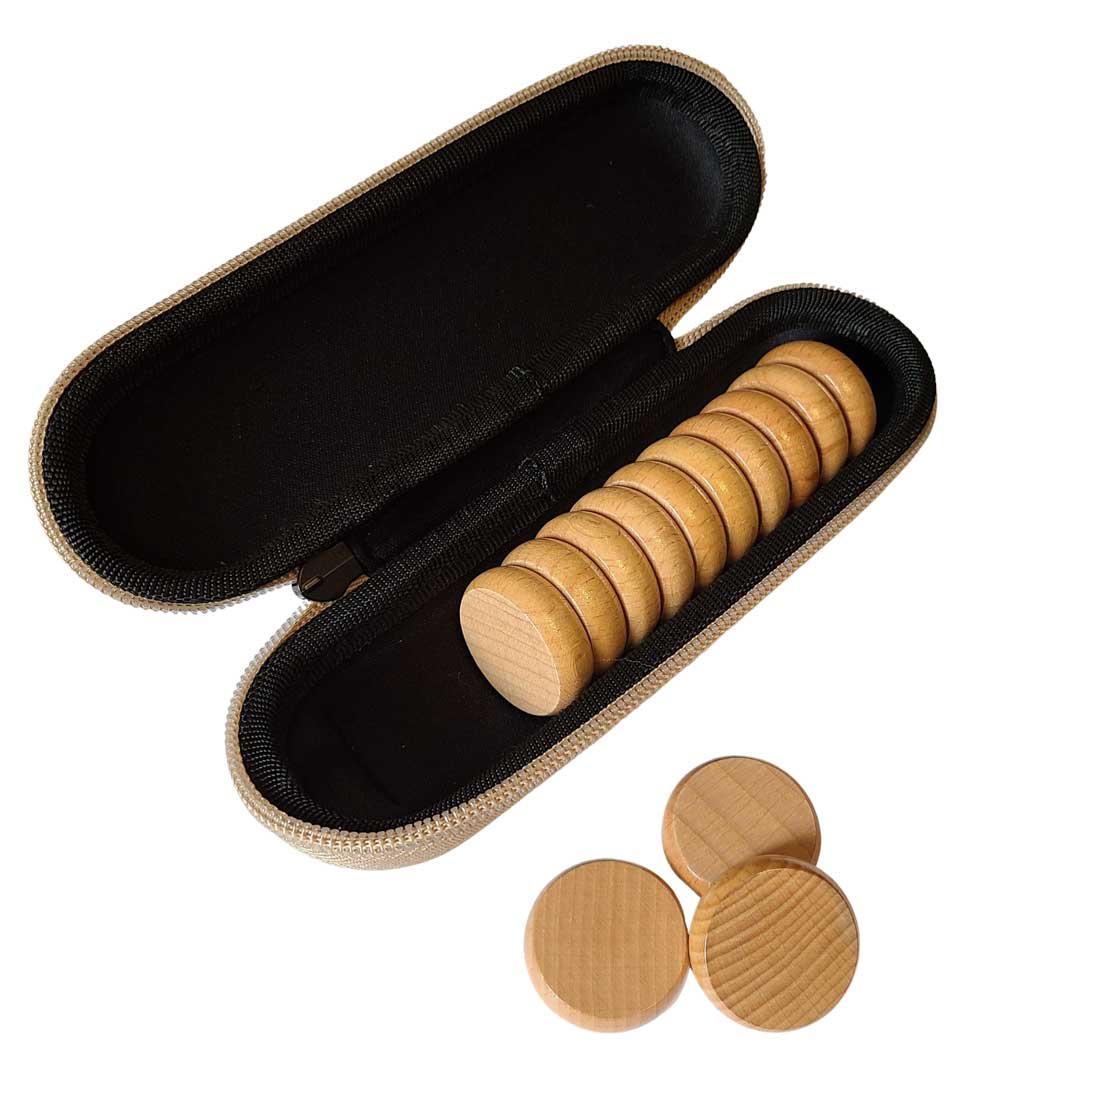 Crokinole Accessories - Premium Glazed Wooden Crokinole Discs With Hard Carry Case, 13 Discs